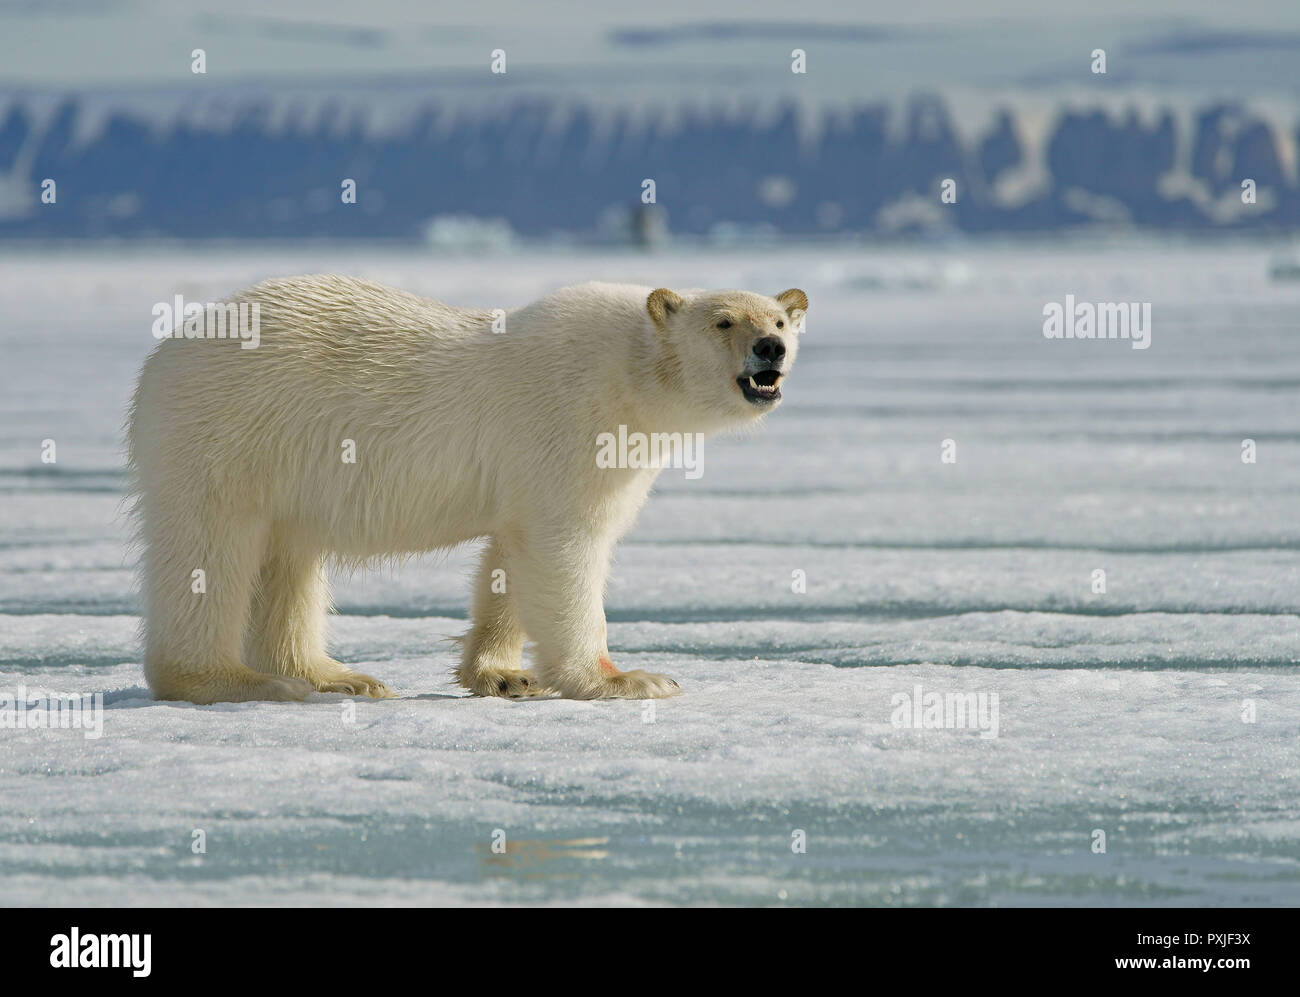 Orso polare (Ursus maritimus), giovane animale in piedi sul ghiaccio, Svalbard artico norvegese, Norvegia Foto Stock